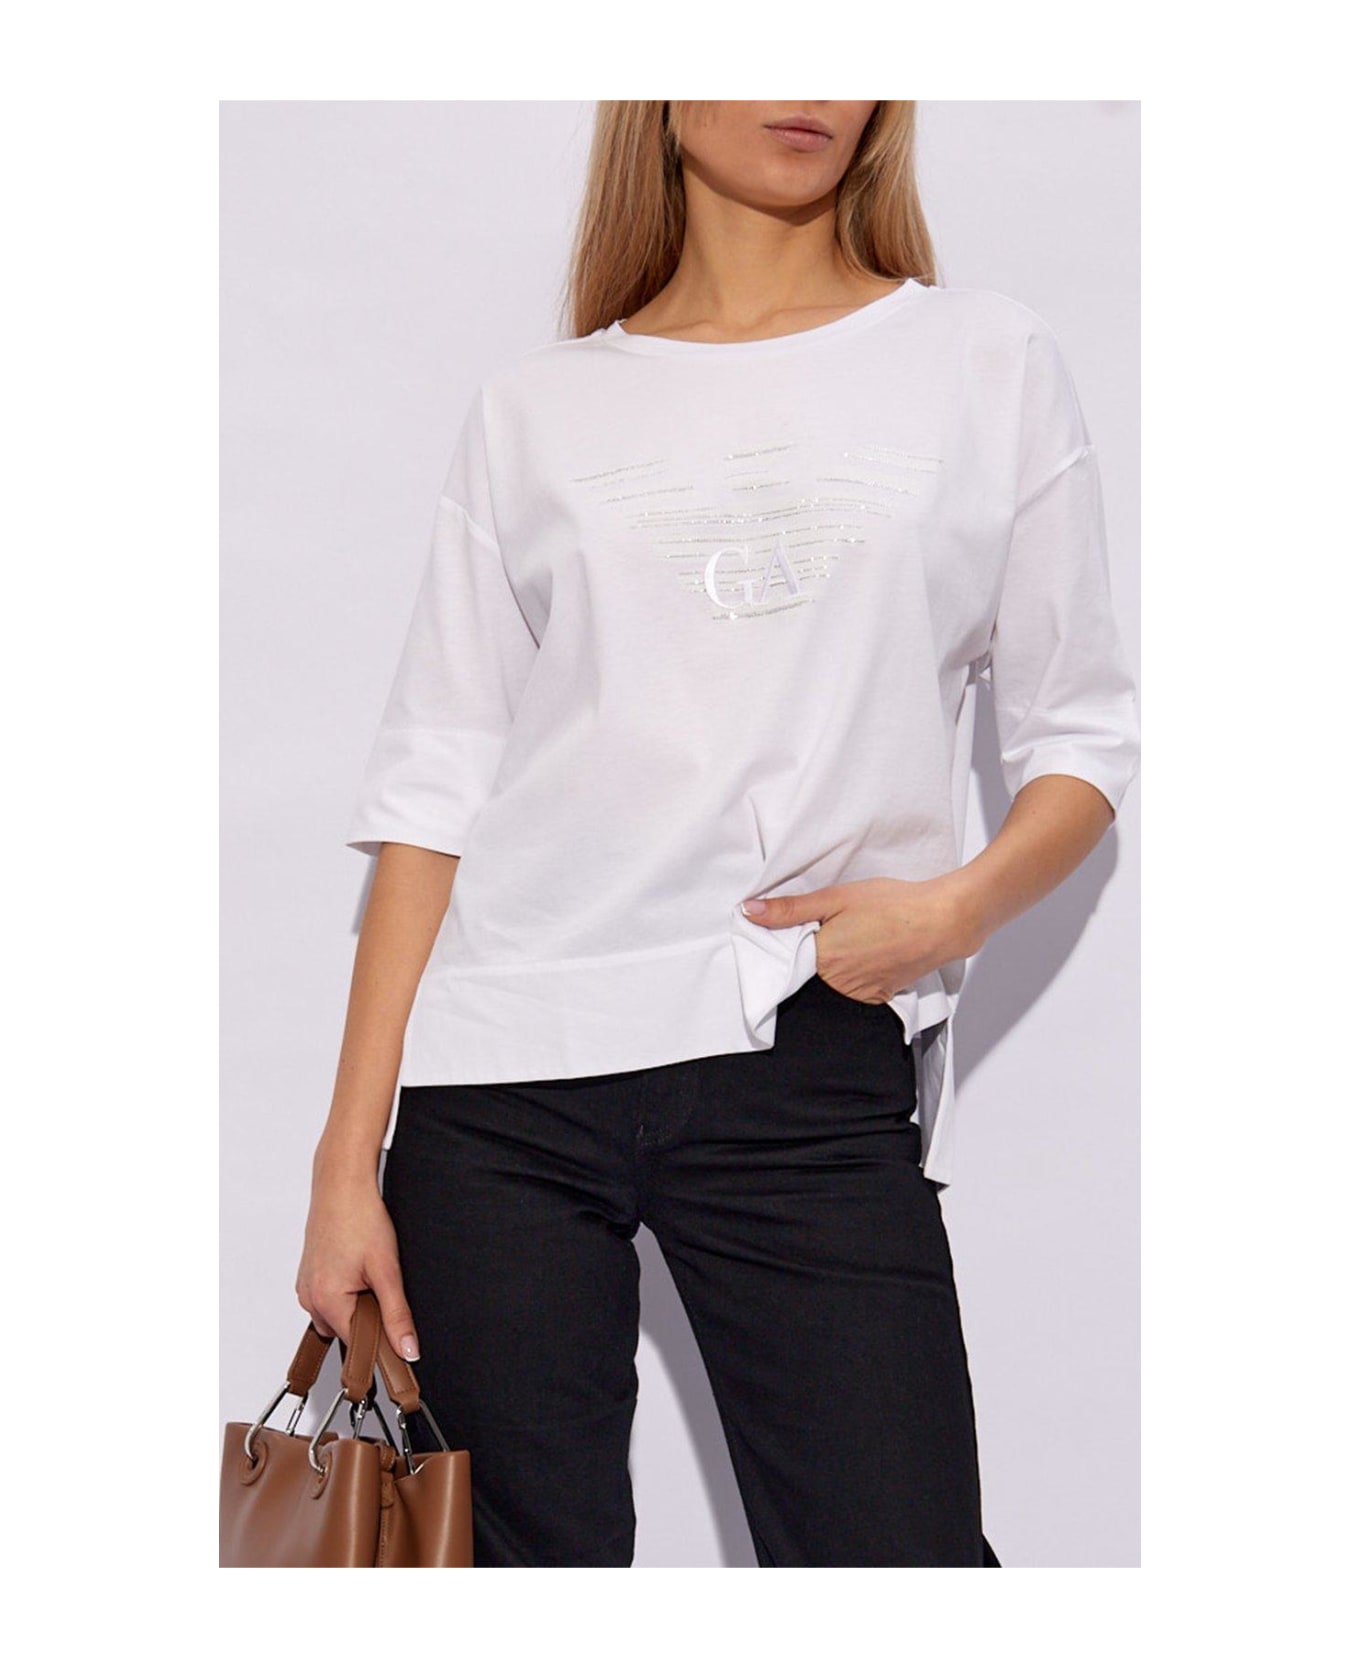 Emporio Armani T-shirt With Logo - White トップス